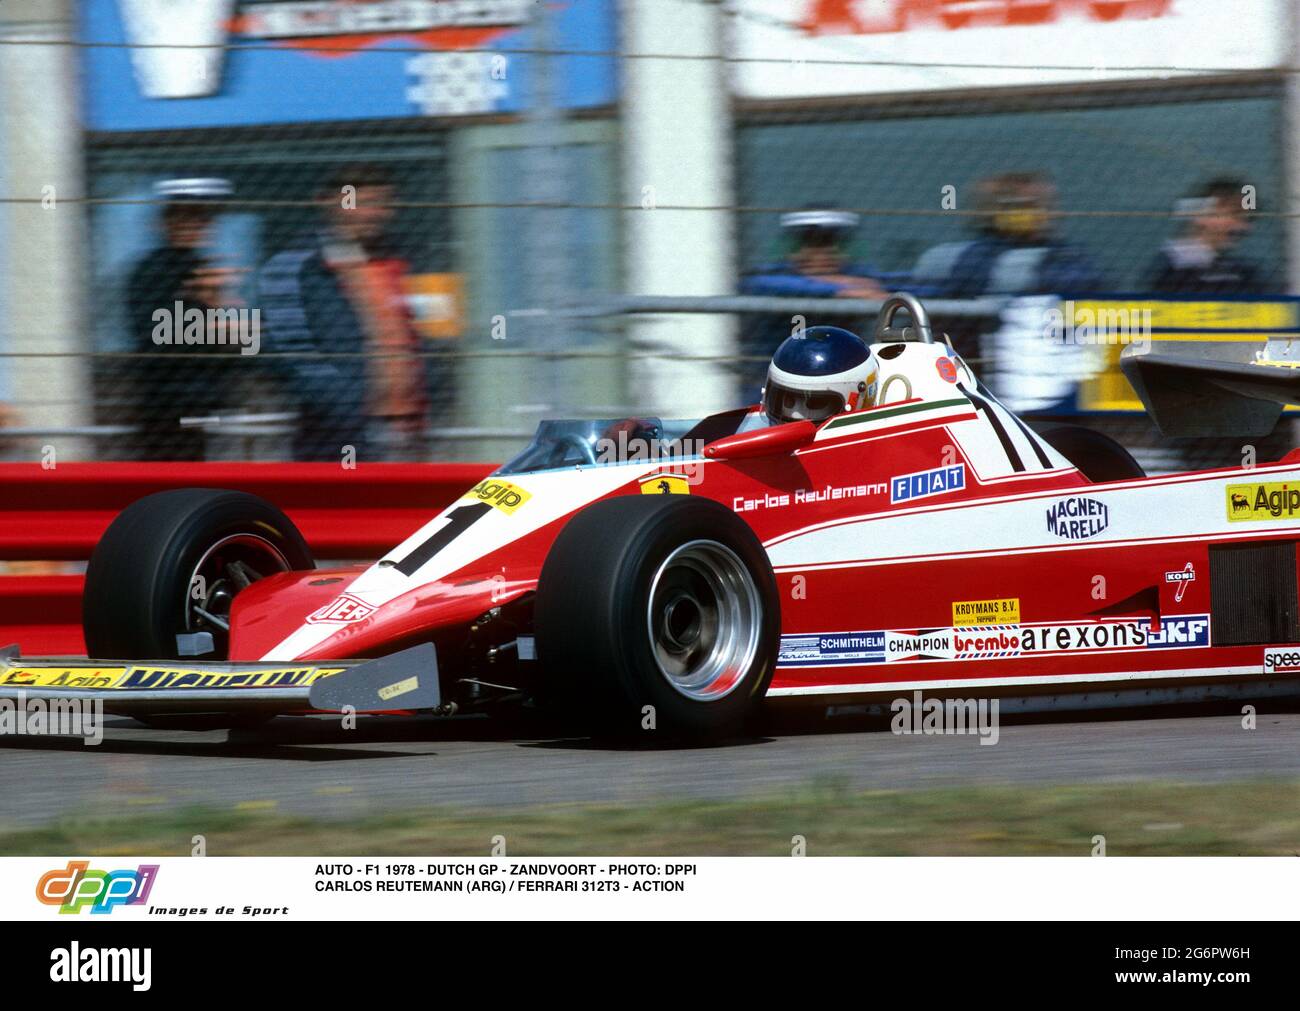 AUTO - F1 1978 - DUTCH GP - ZANDVOORT - PHOTO: DPPI CARLOS REUTEMANN (ARG) / FERRARI 312T3 - ACTION Stock Photo